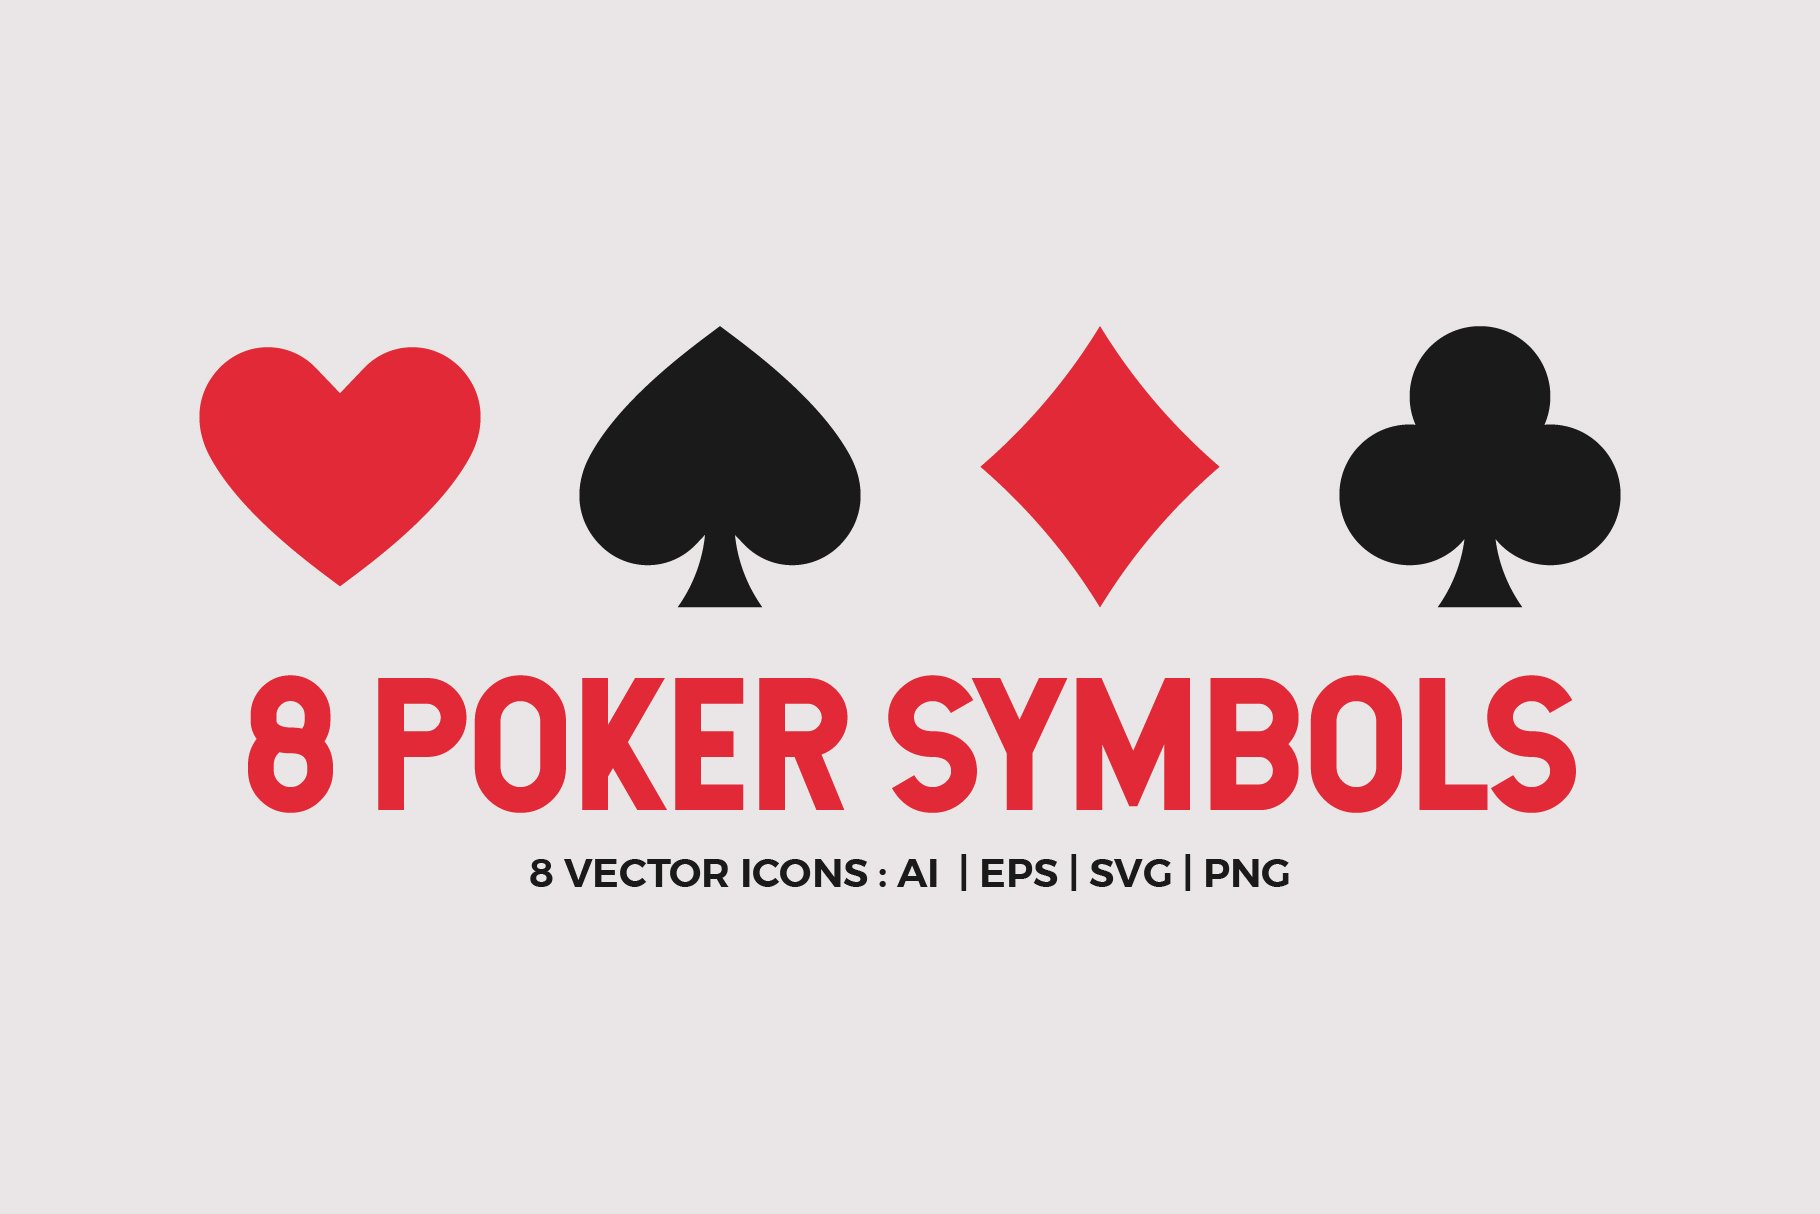 8 Playing Card Poker Symbols Set cover image.